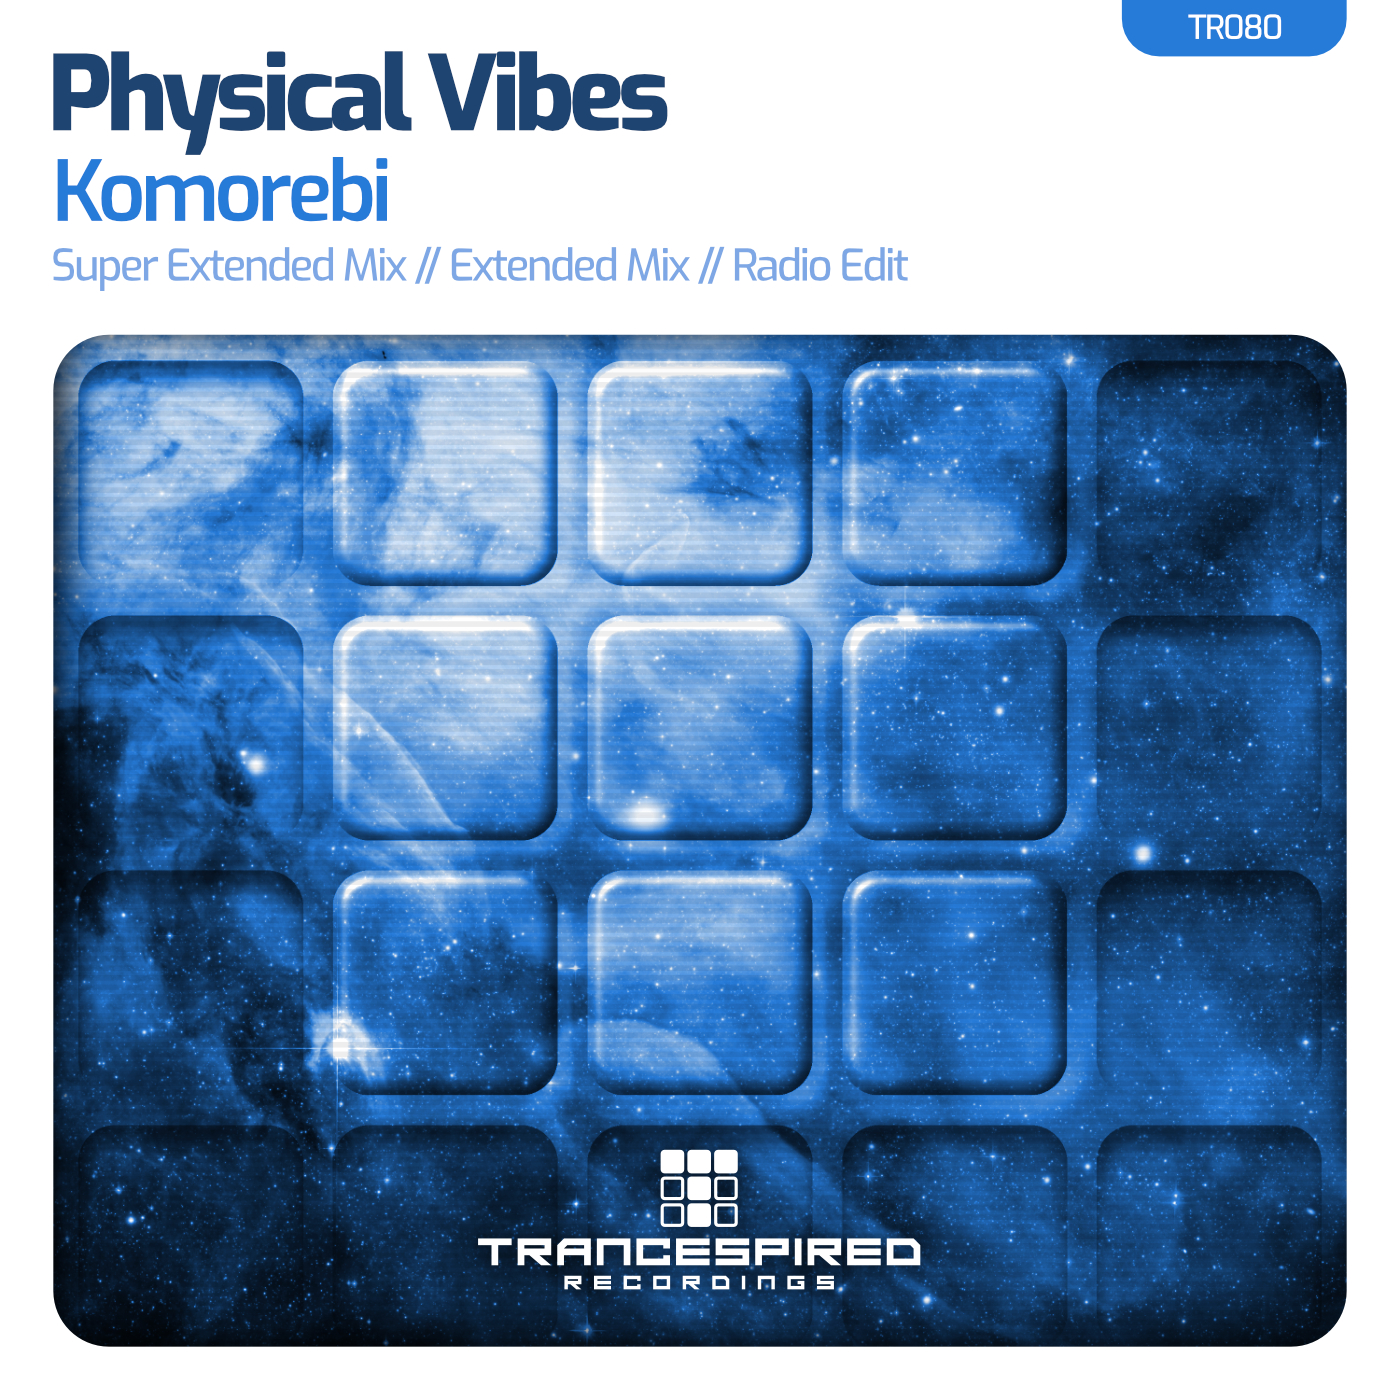 Physical Vibes presents Komorebi on Trancespired Recordings